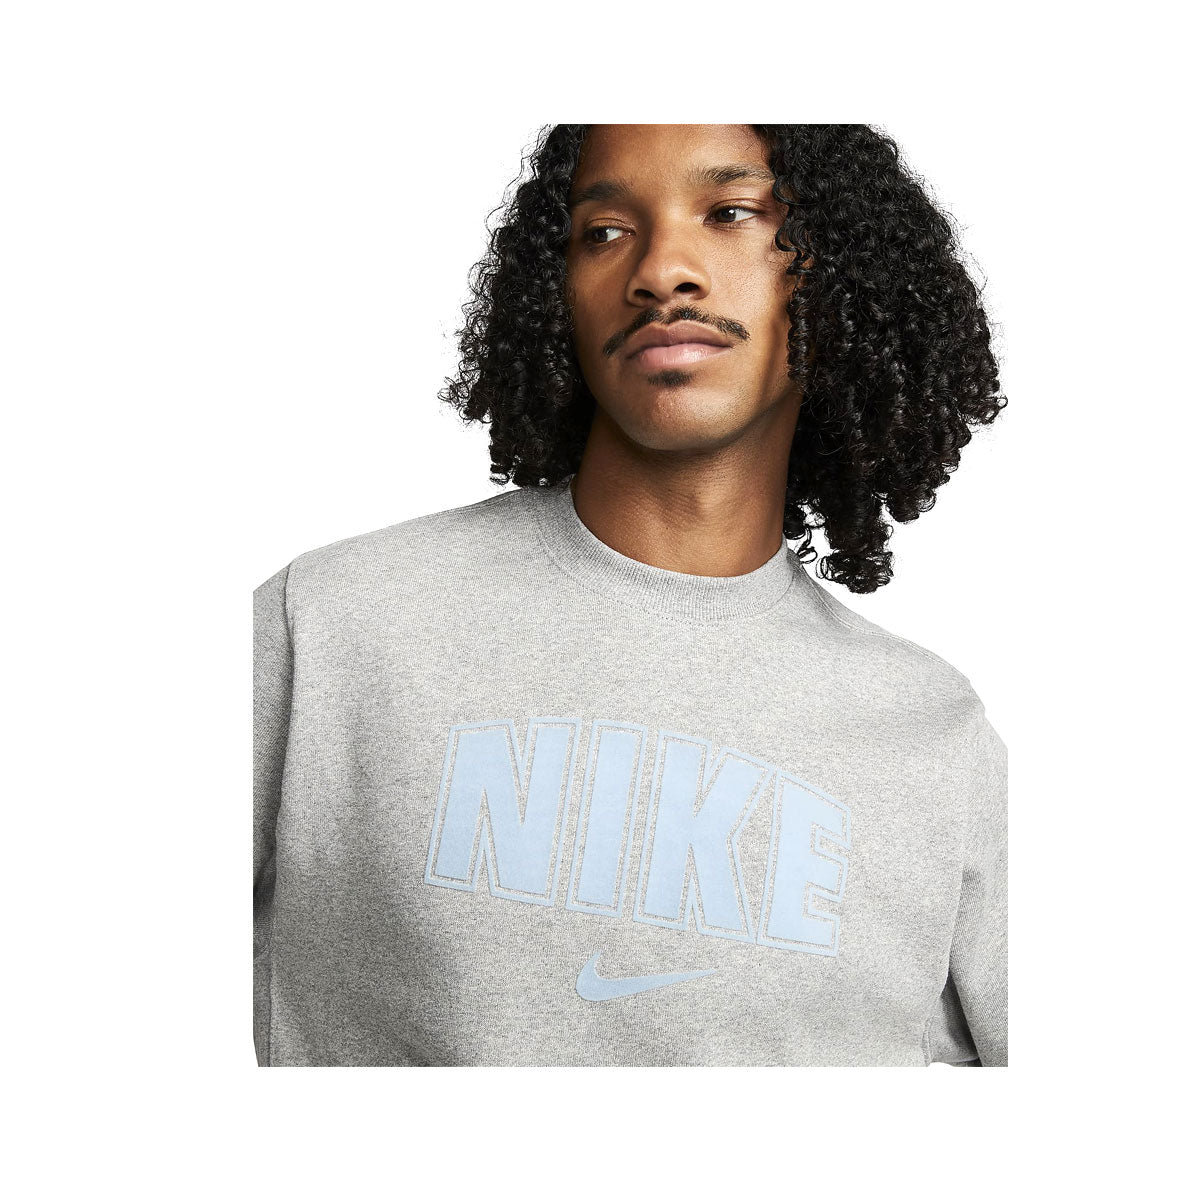 Nike Men's Fleece Sweatshirt